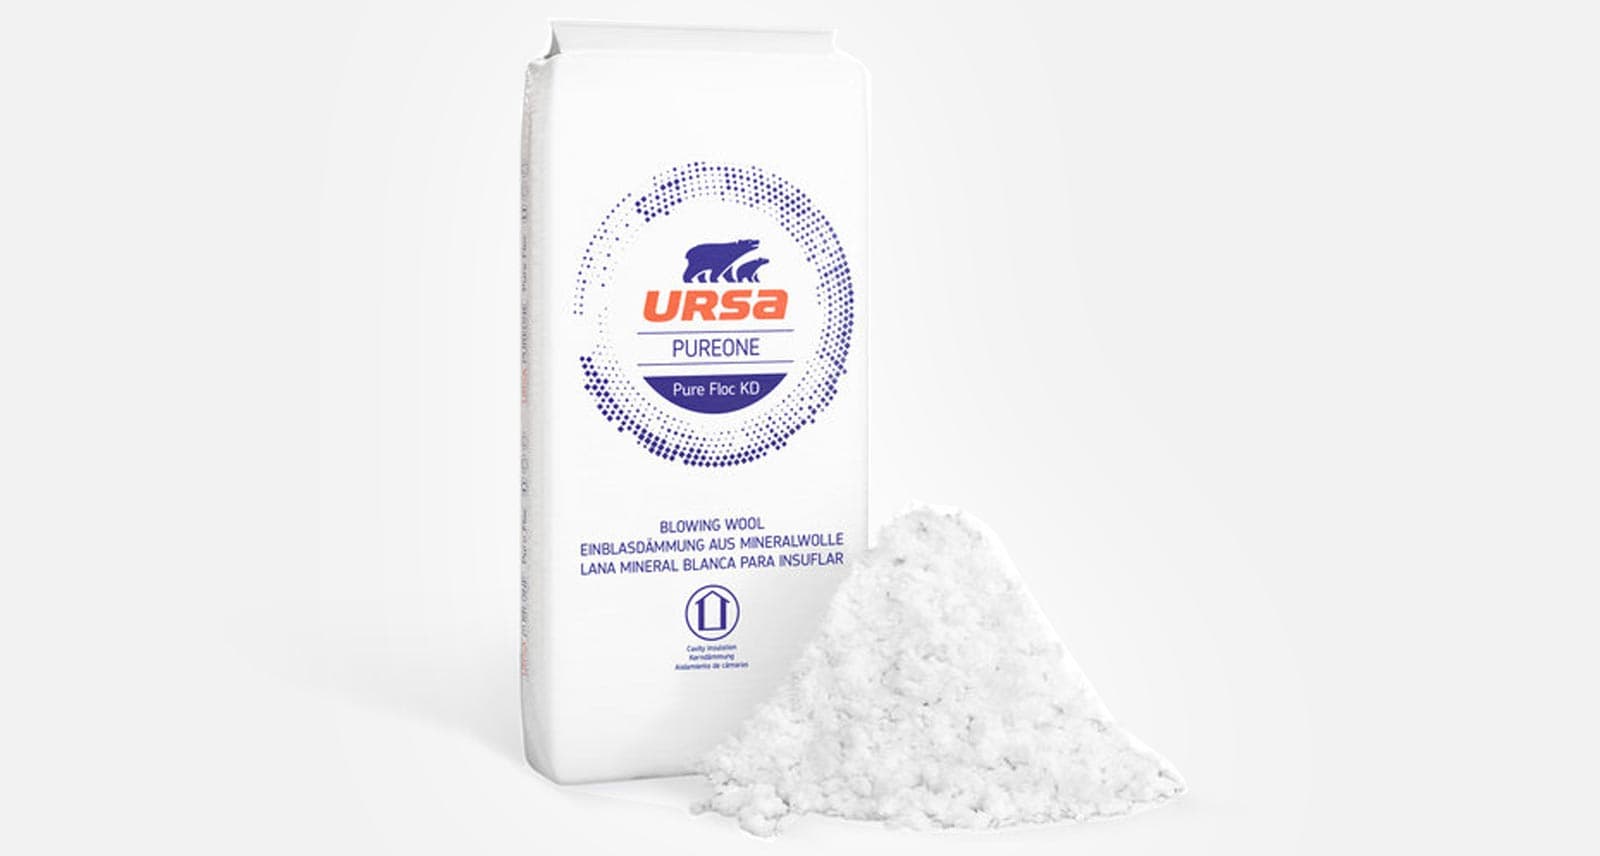 Lana mineral blanca URSA PUREONE Pure Floc KD que se aplica por insuflado